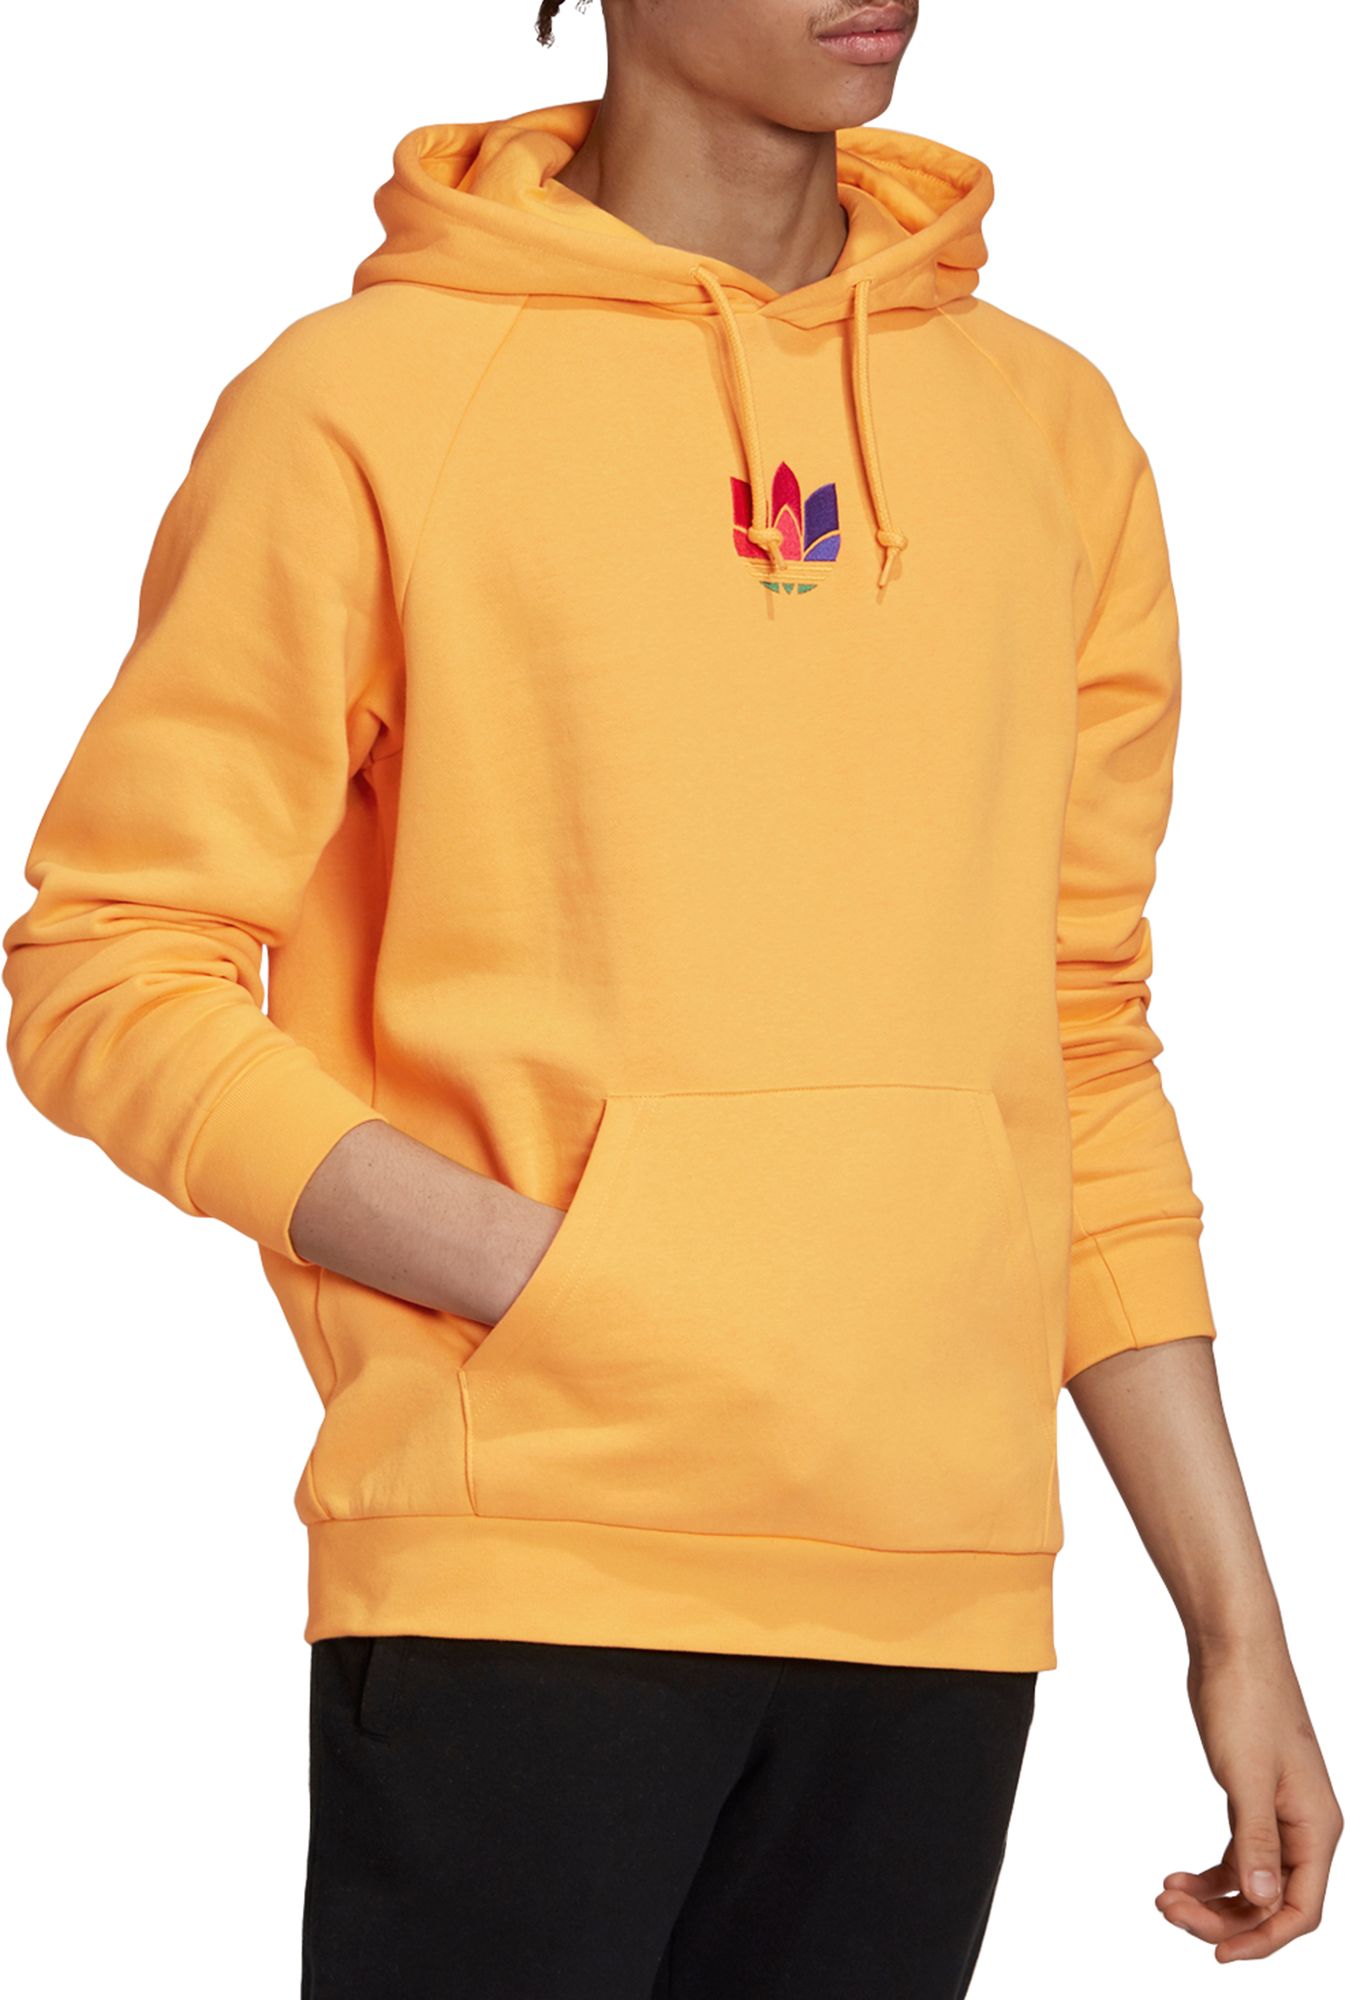 yellow trefoil adidas hoodie